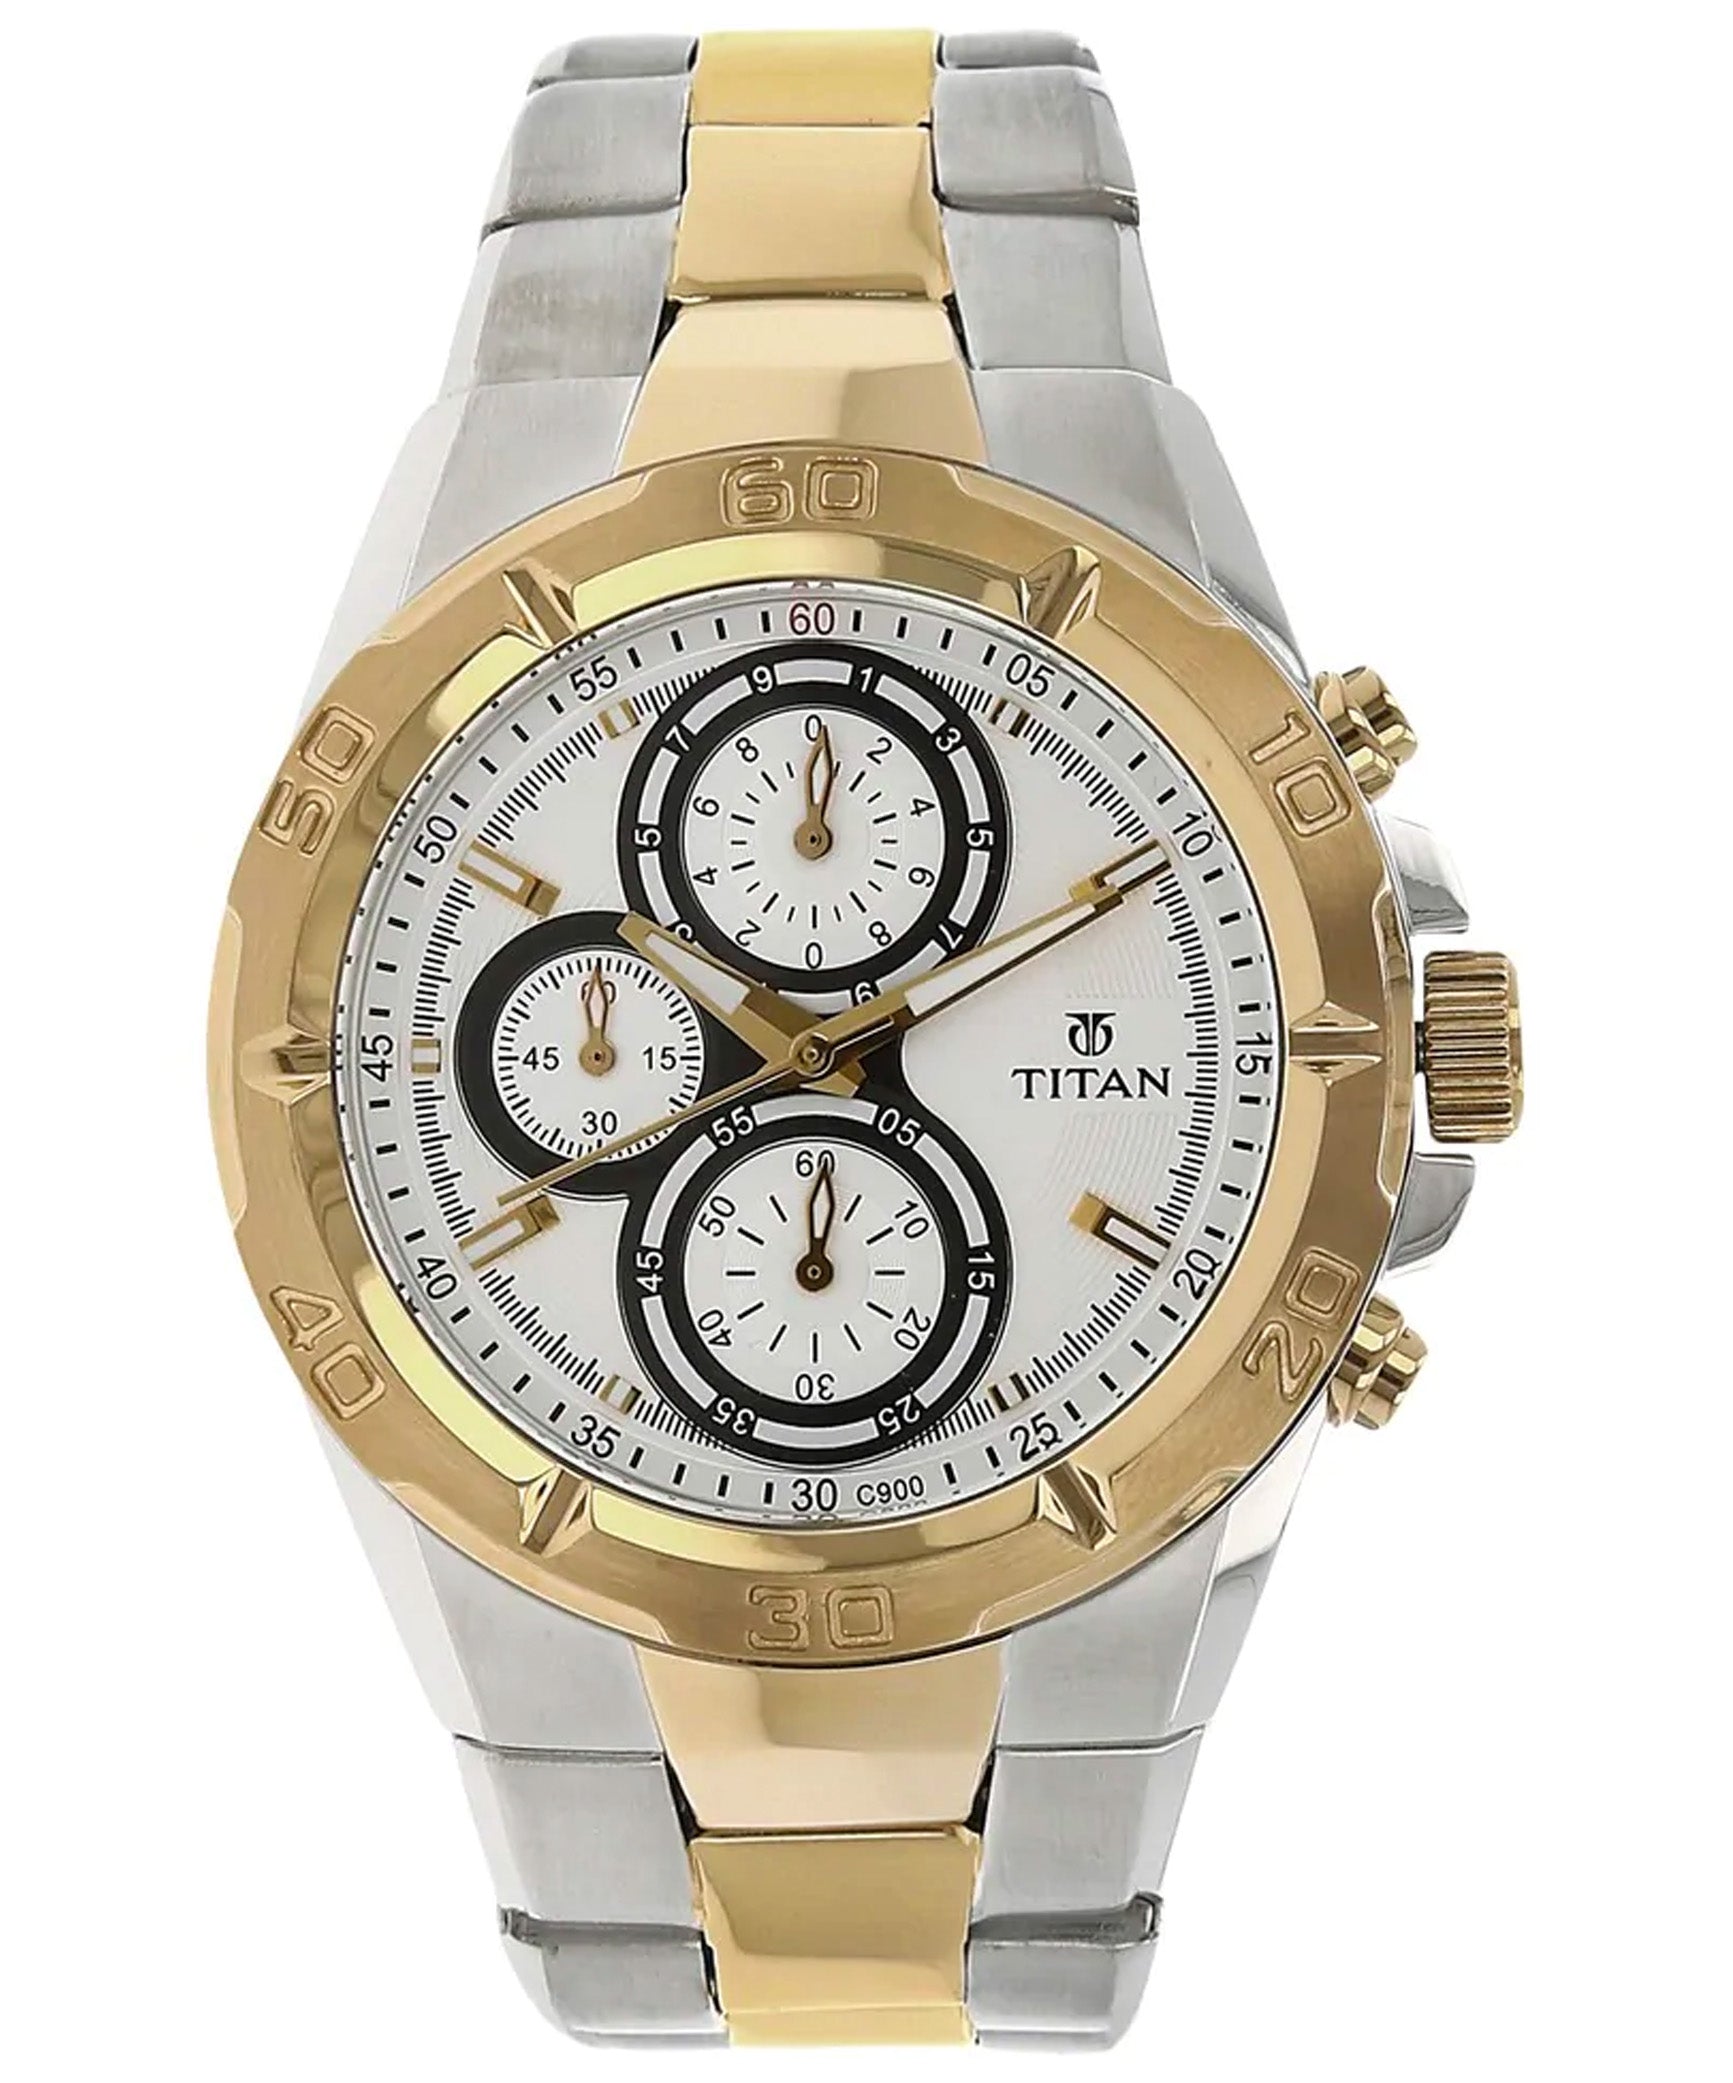 Titan Men's Watch Octane Collection Analog, White & Black Dial Silver & Gold Stainless Strap, 9308BM01